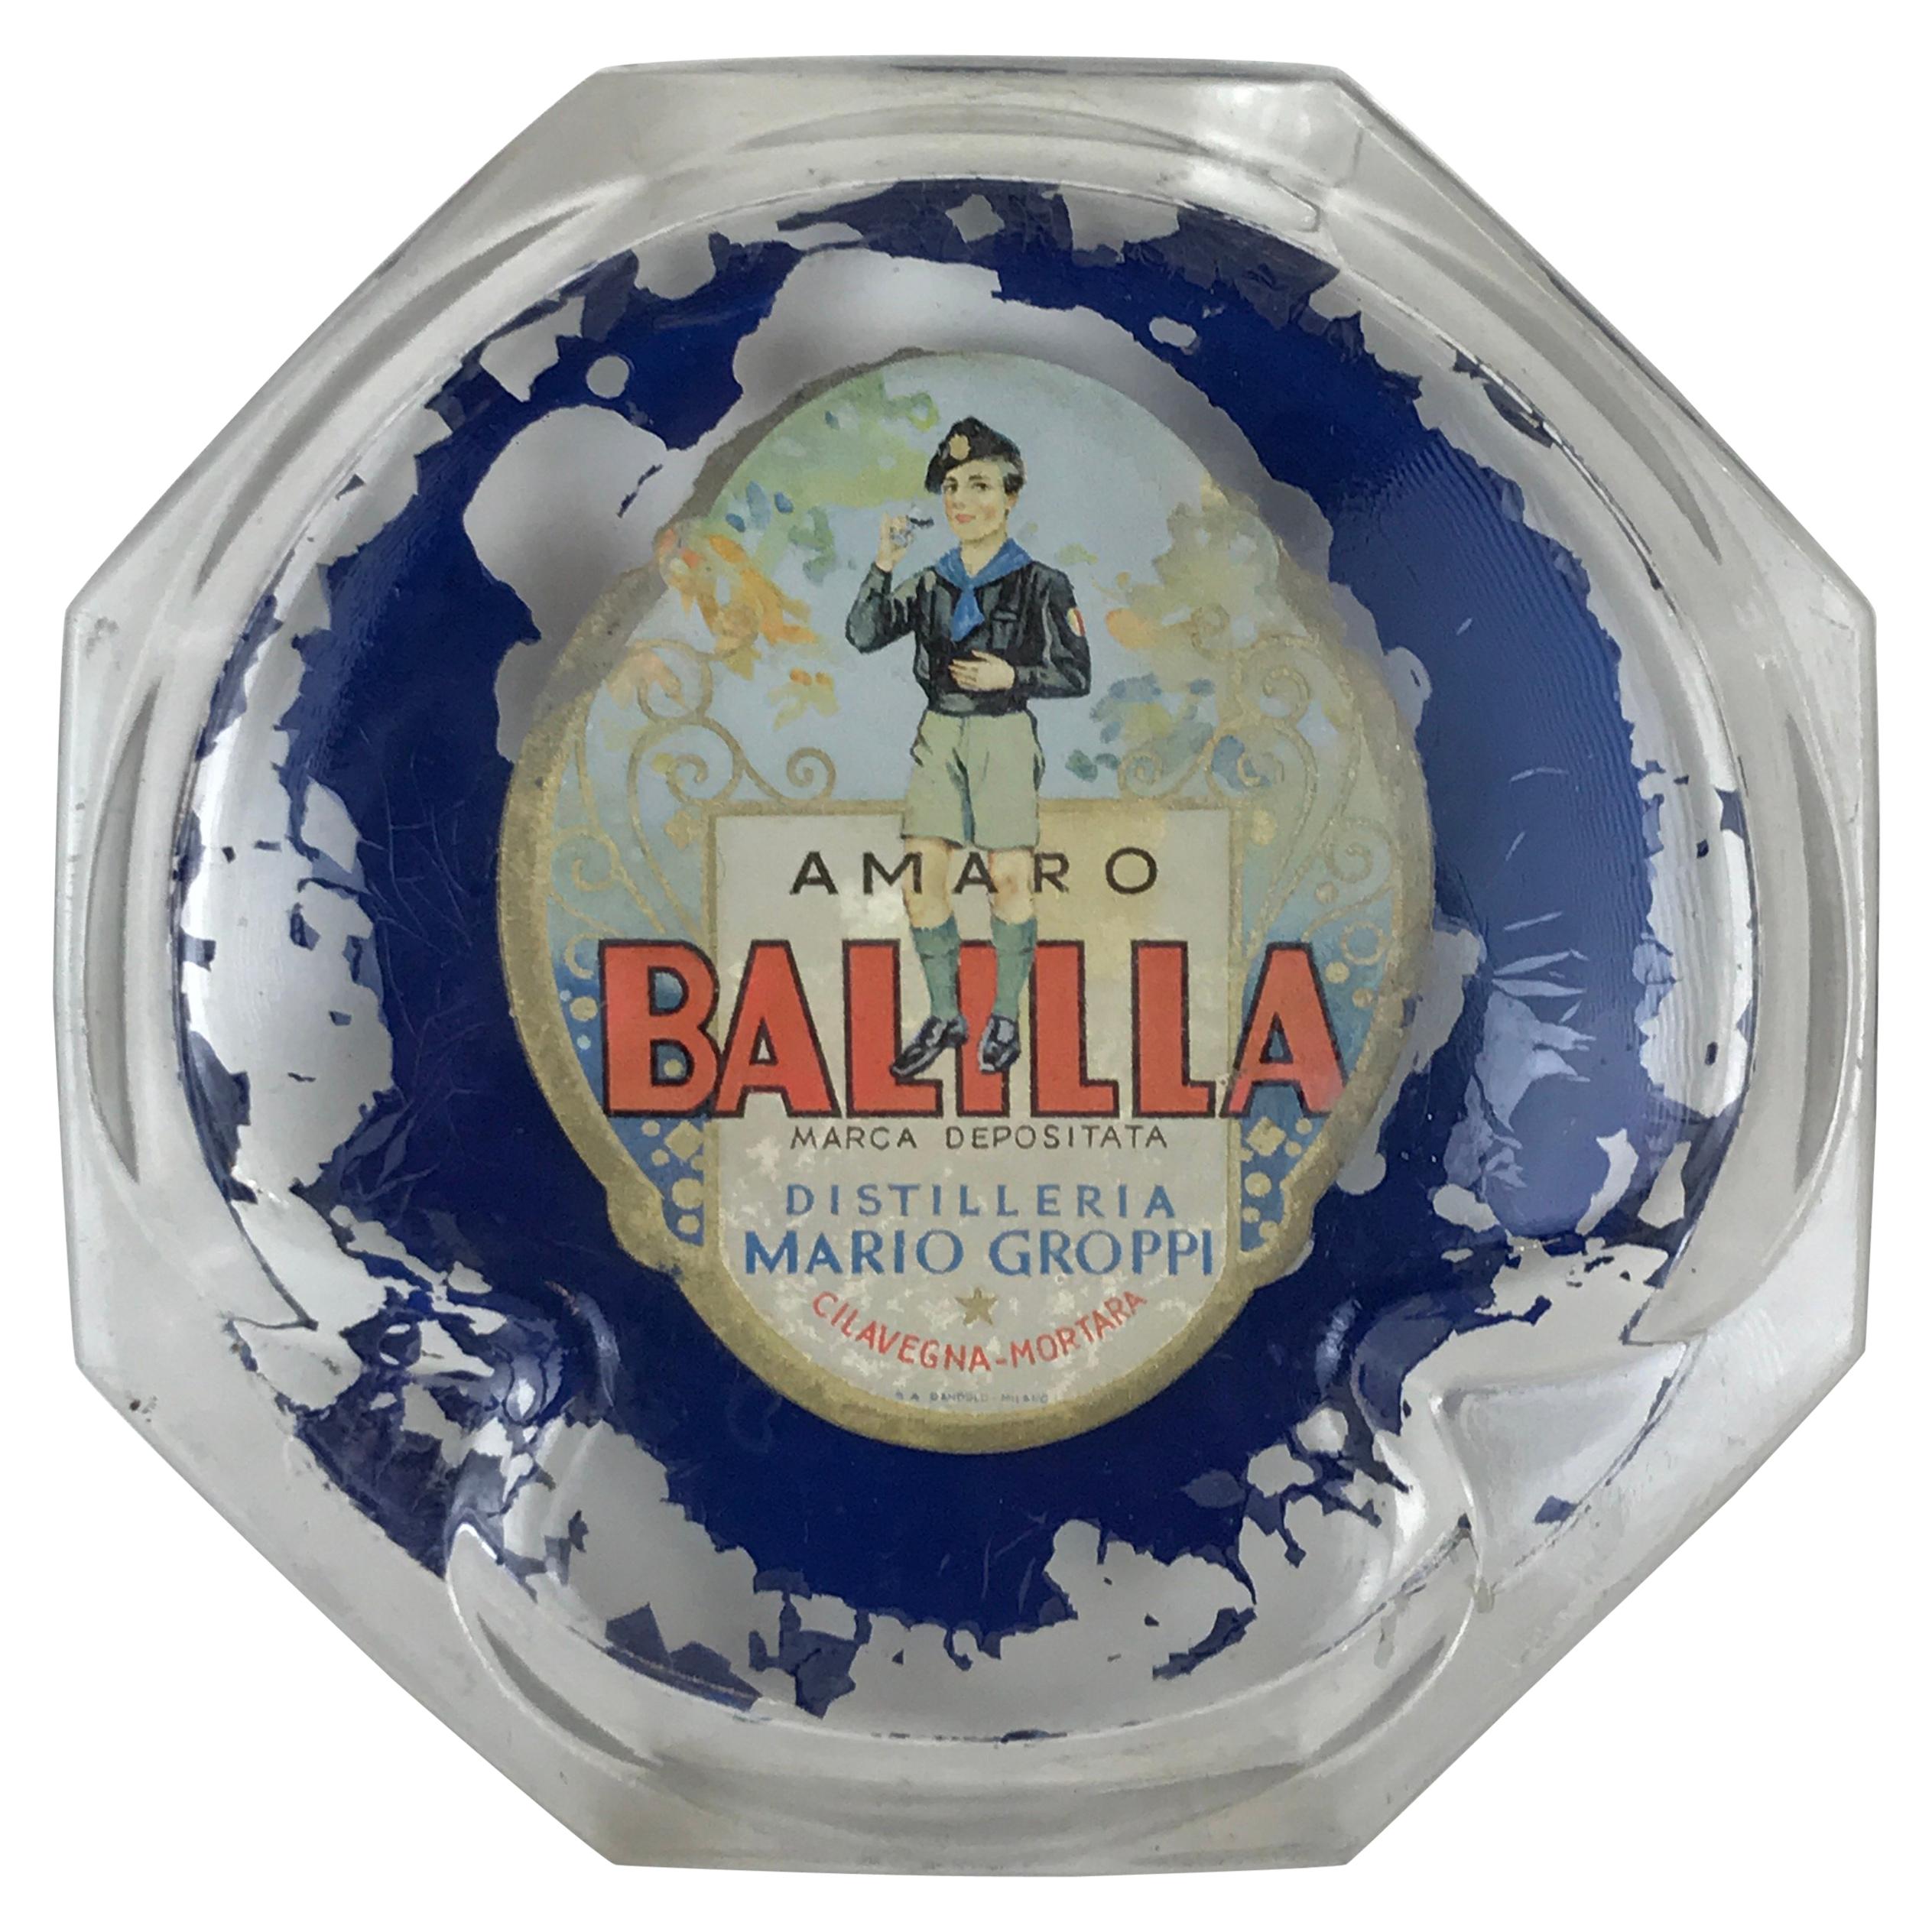 1930s Vintage Italian Advertising Amaro Balilla Glass Ashtray Made in Italy